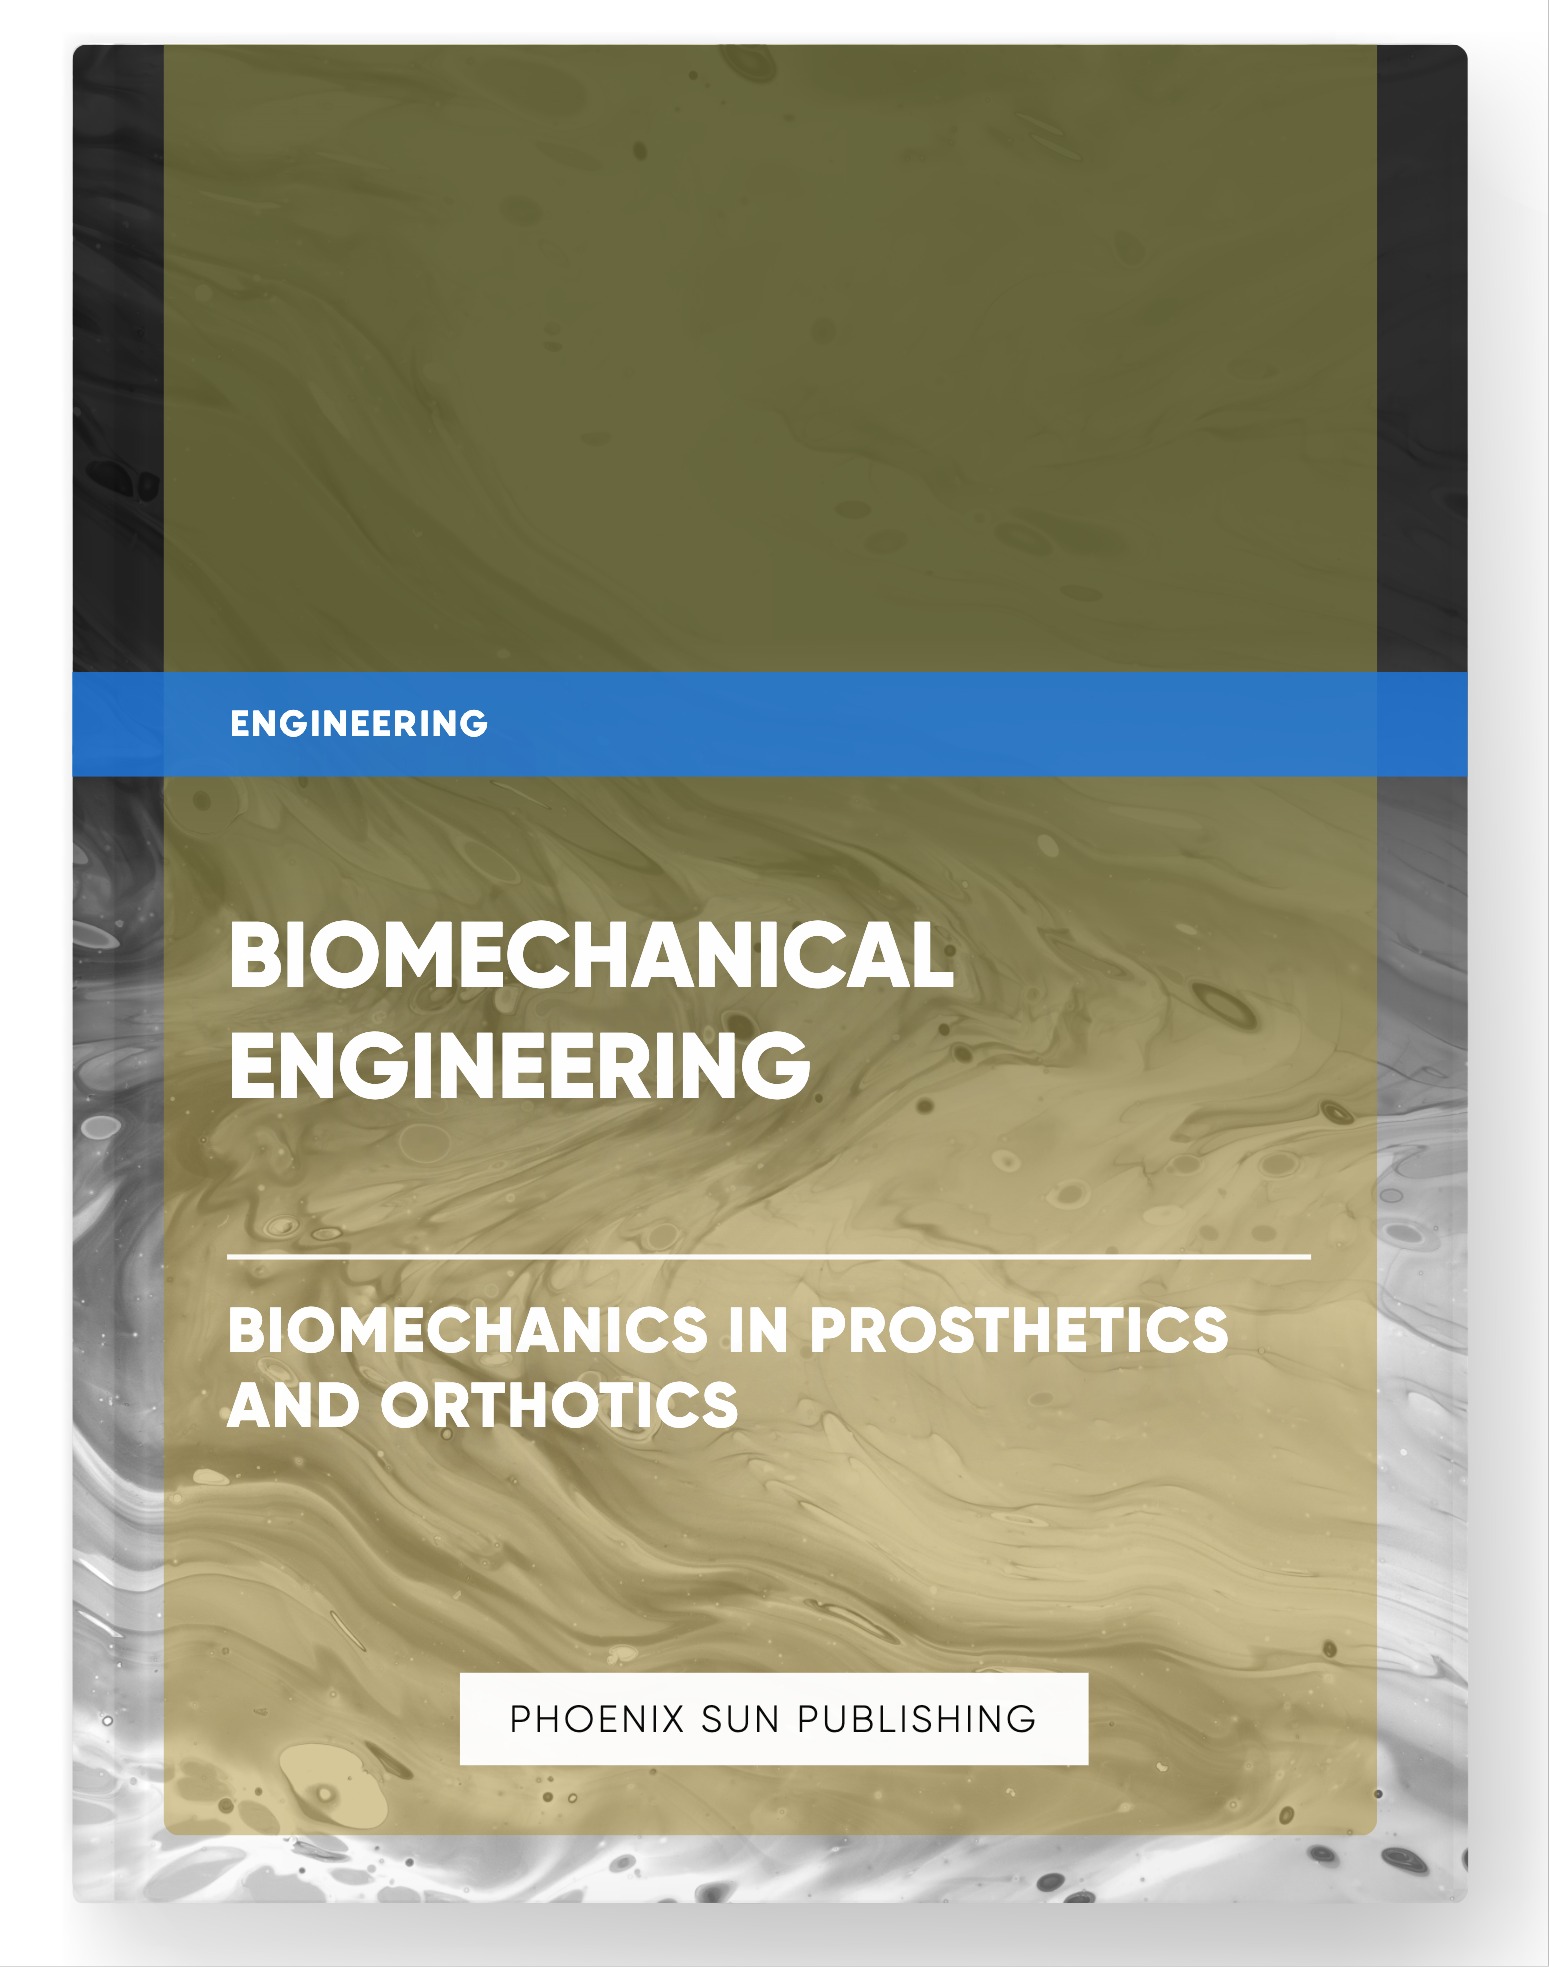 Biomechanical Engineering – Biomechanics in Prosthetics and Orthotics